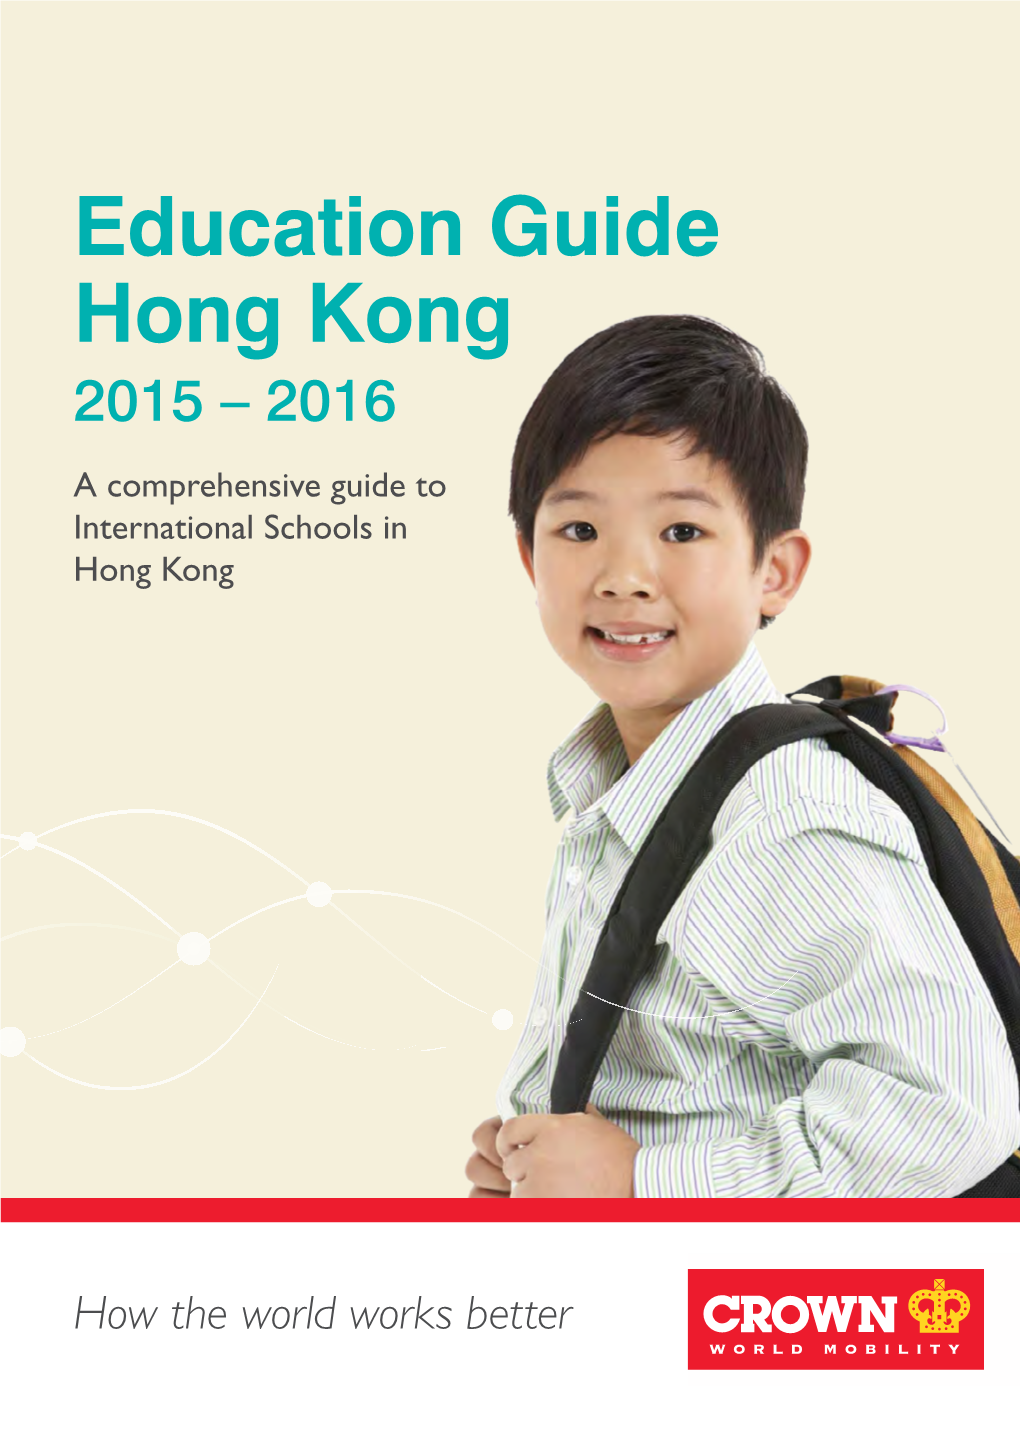 Education Guide Hong Kong 2015 – 2016